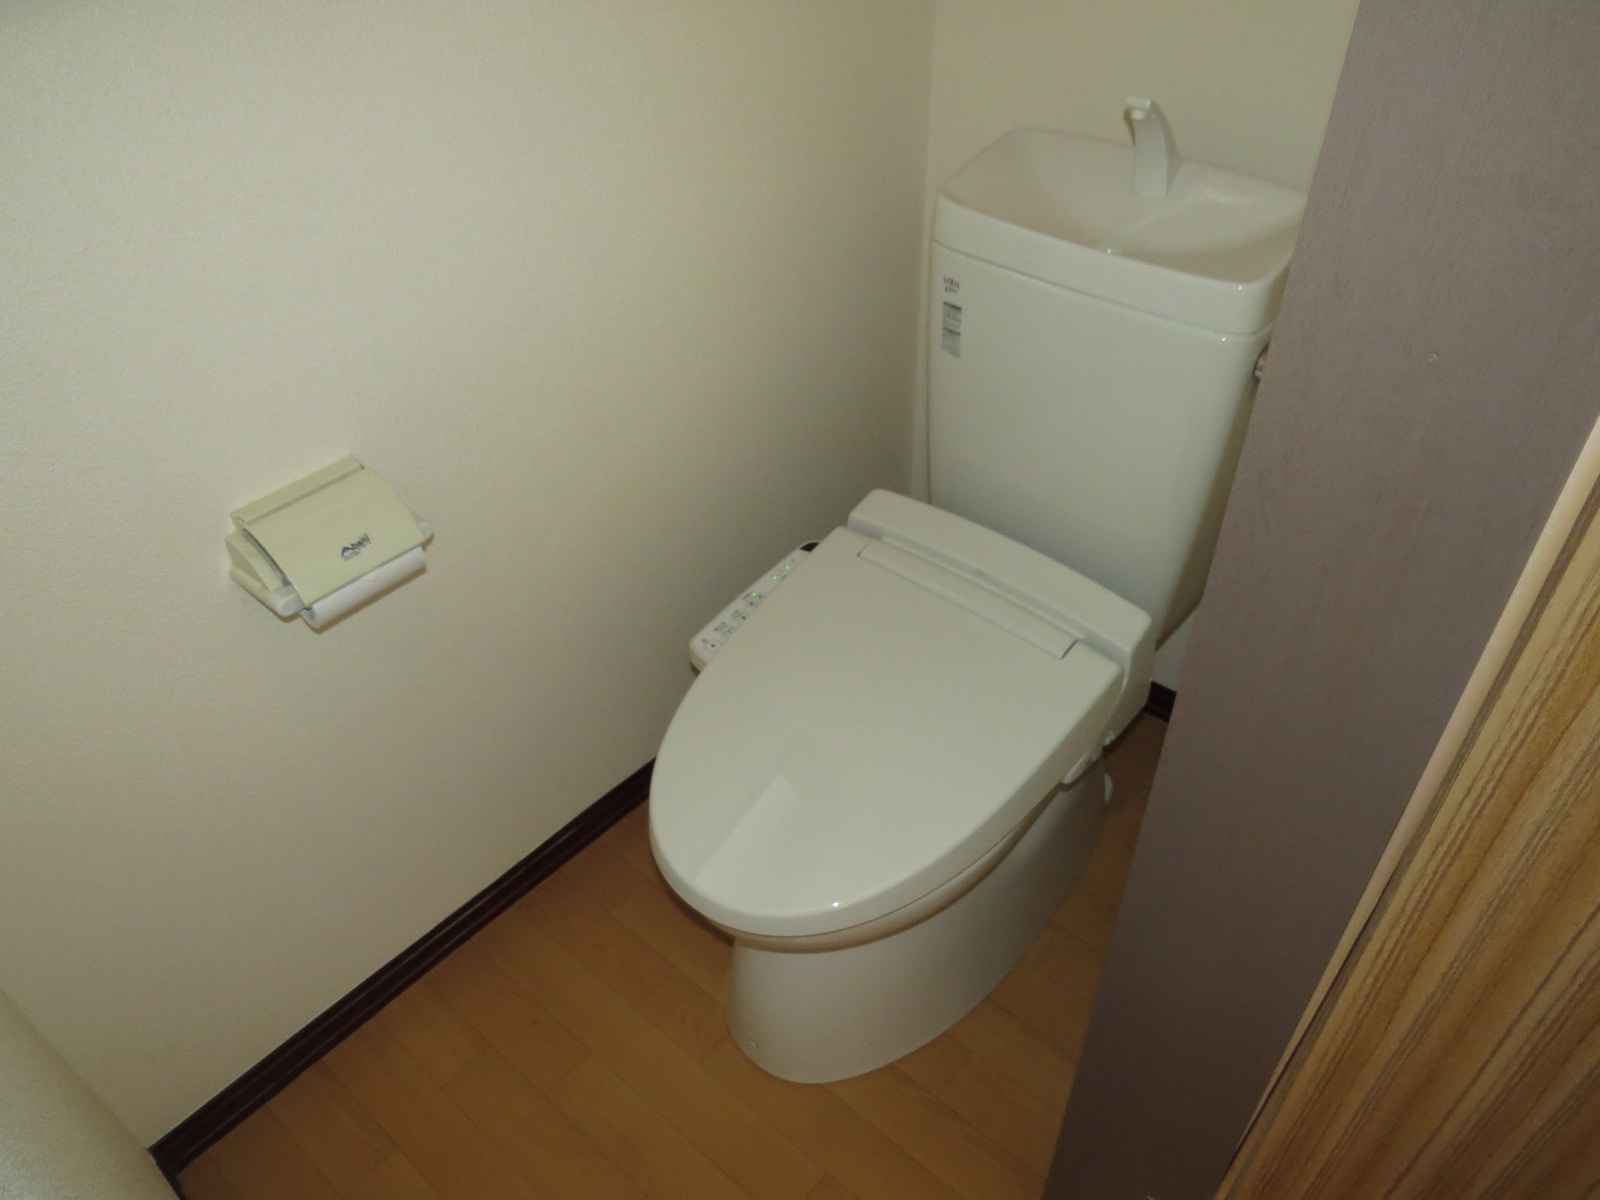 Toilet. Washlet with new toilet